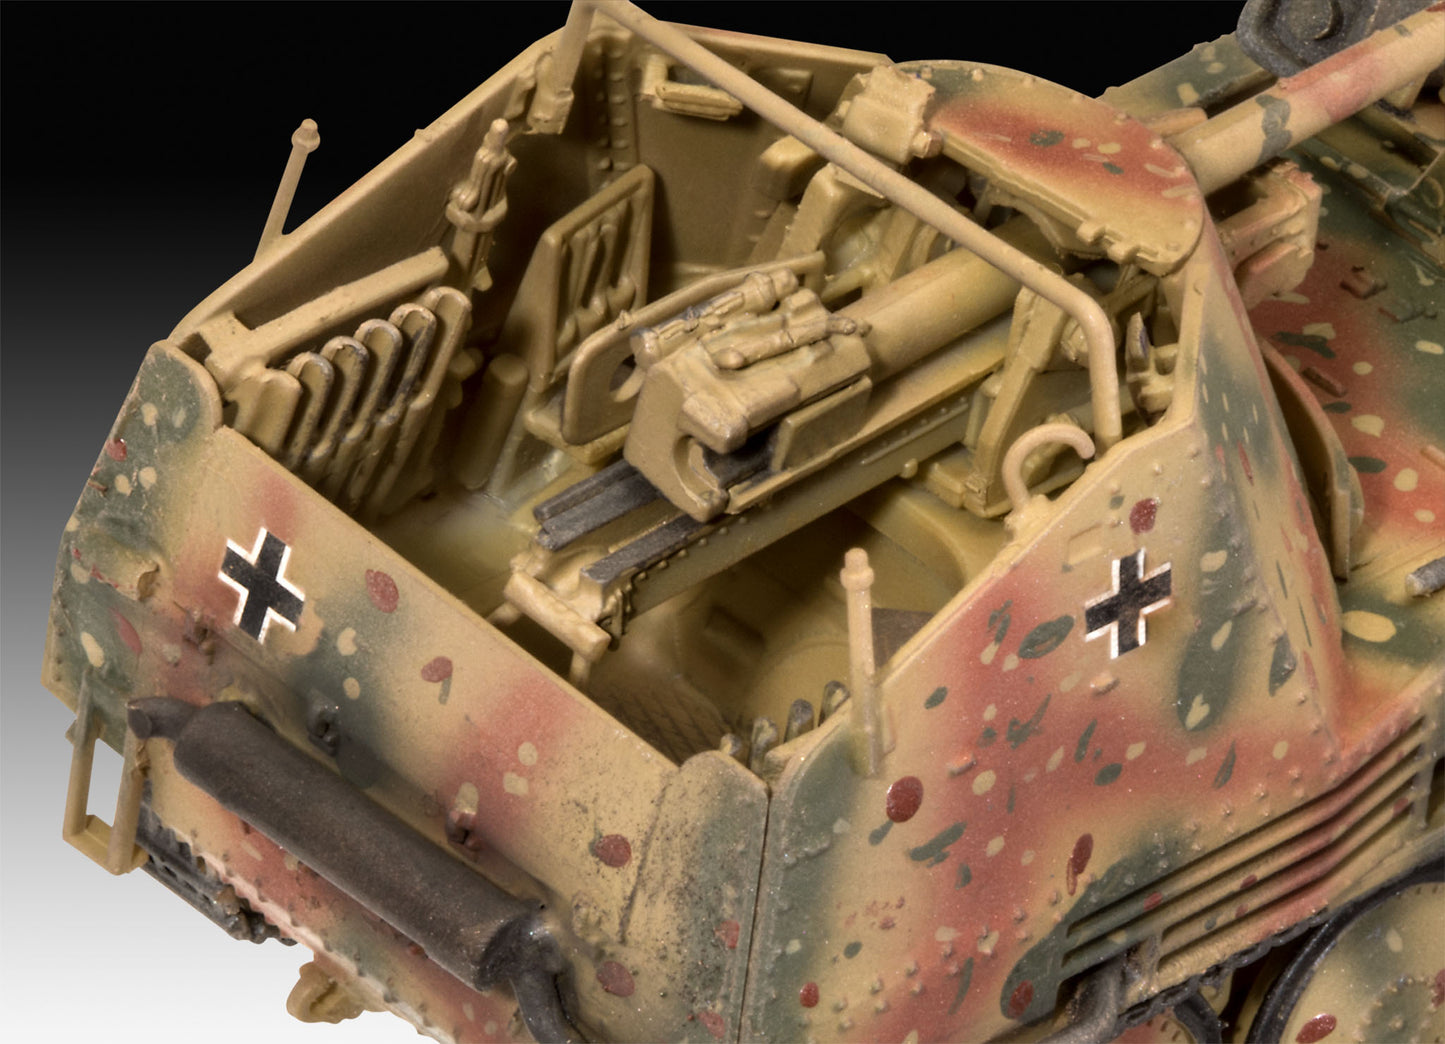 Revell of Germany 03316 1:72 Sd.Kfz. 138 Marder III Ausf. Military Tank Kit